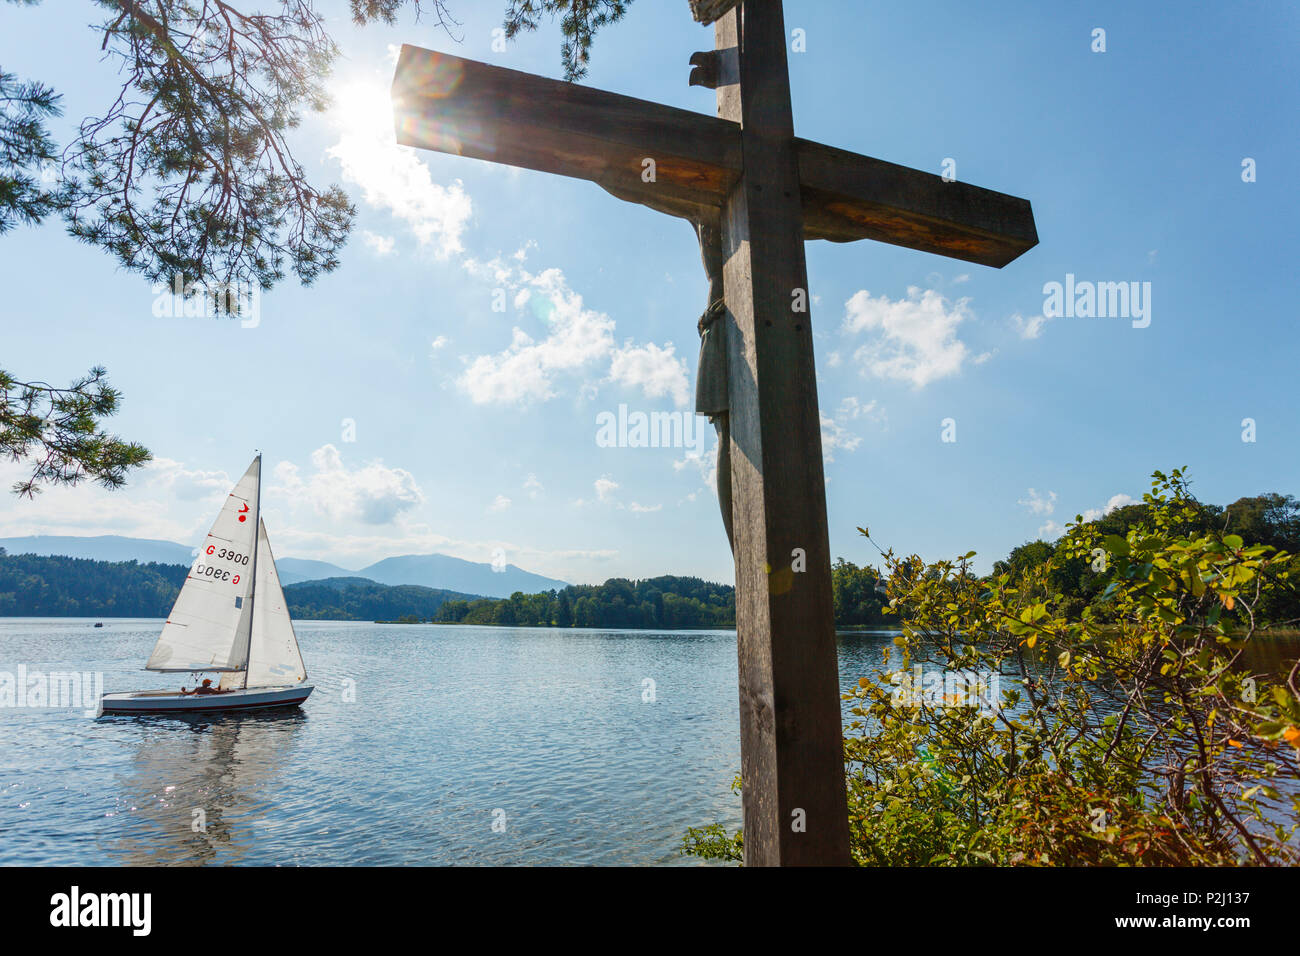 La Cruz de la isla de Jakob, Riegsee, con velero, cerca de Murnau, Tierra Azul, distrito de Garmisch-Partenkirchen, alpi Bávaro Foto de stock